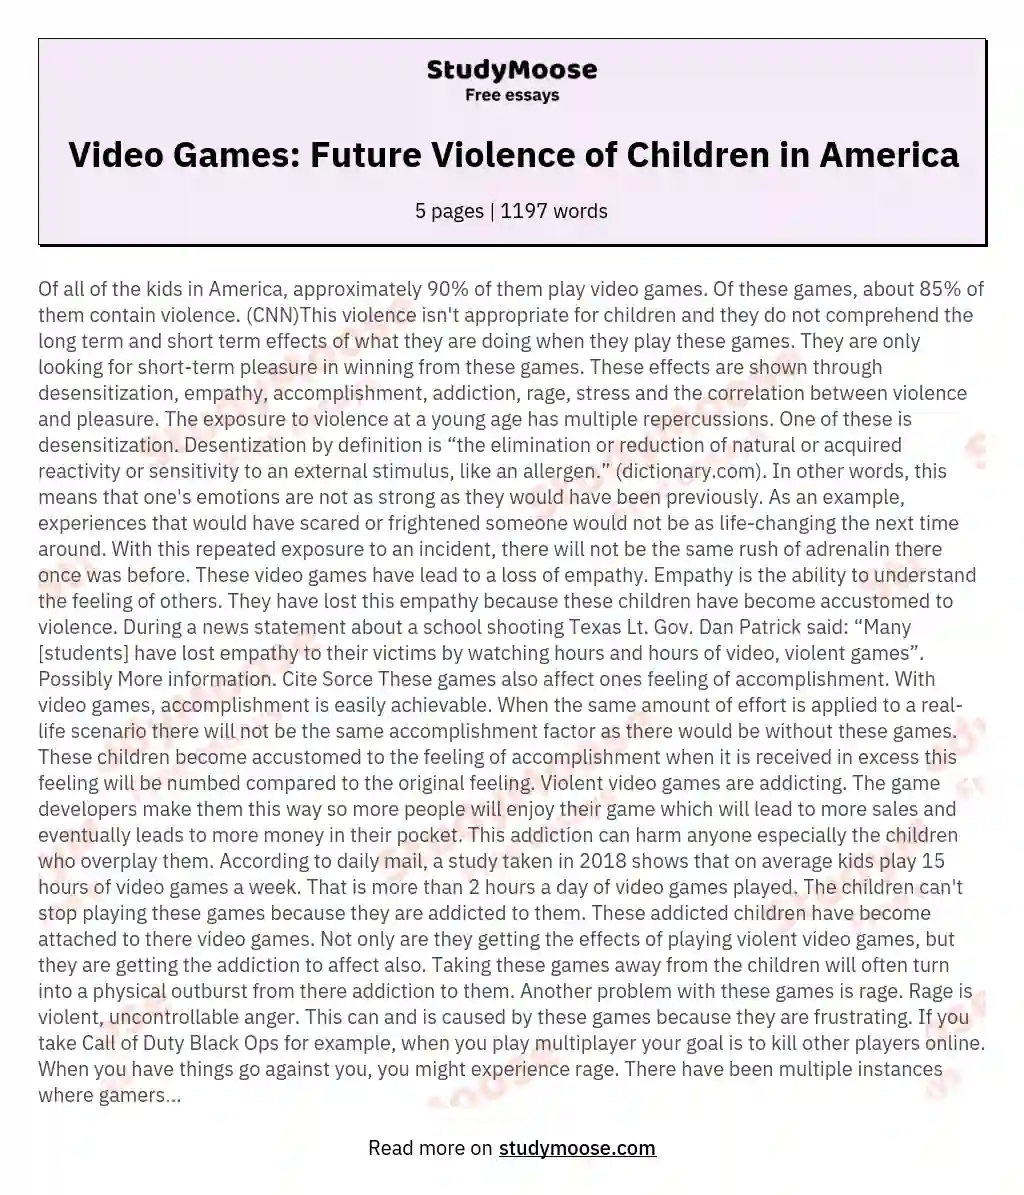 Video Games: Future Violence of Children in America essay